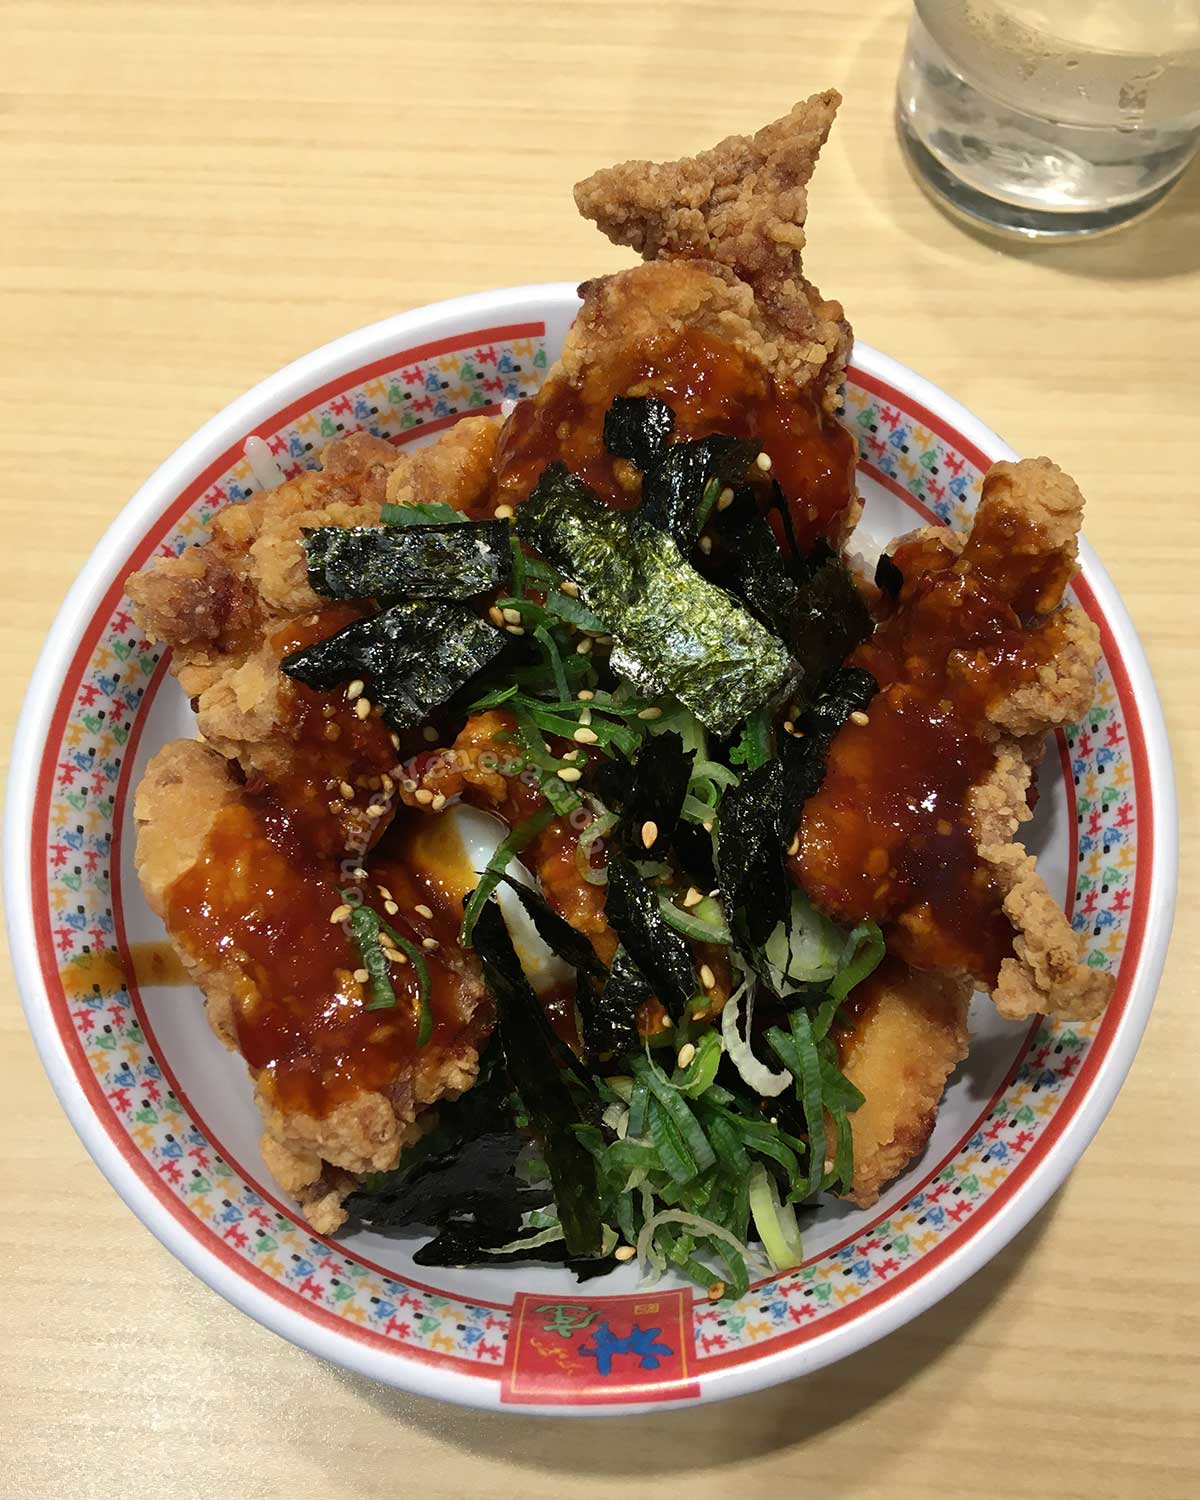 Chicken karaage with sweet spicy sauce and nori in Dotonbori, Osaka